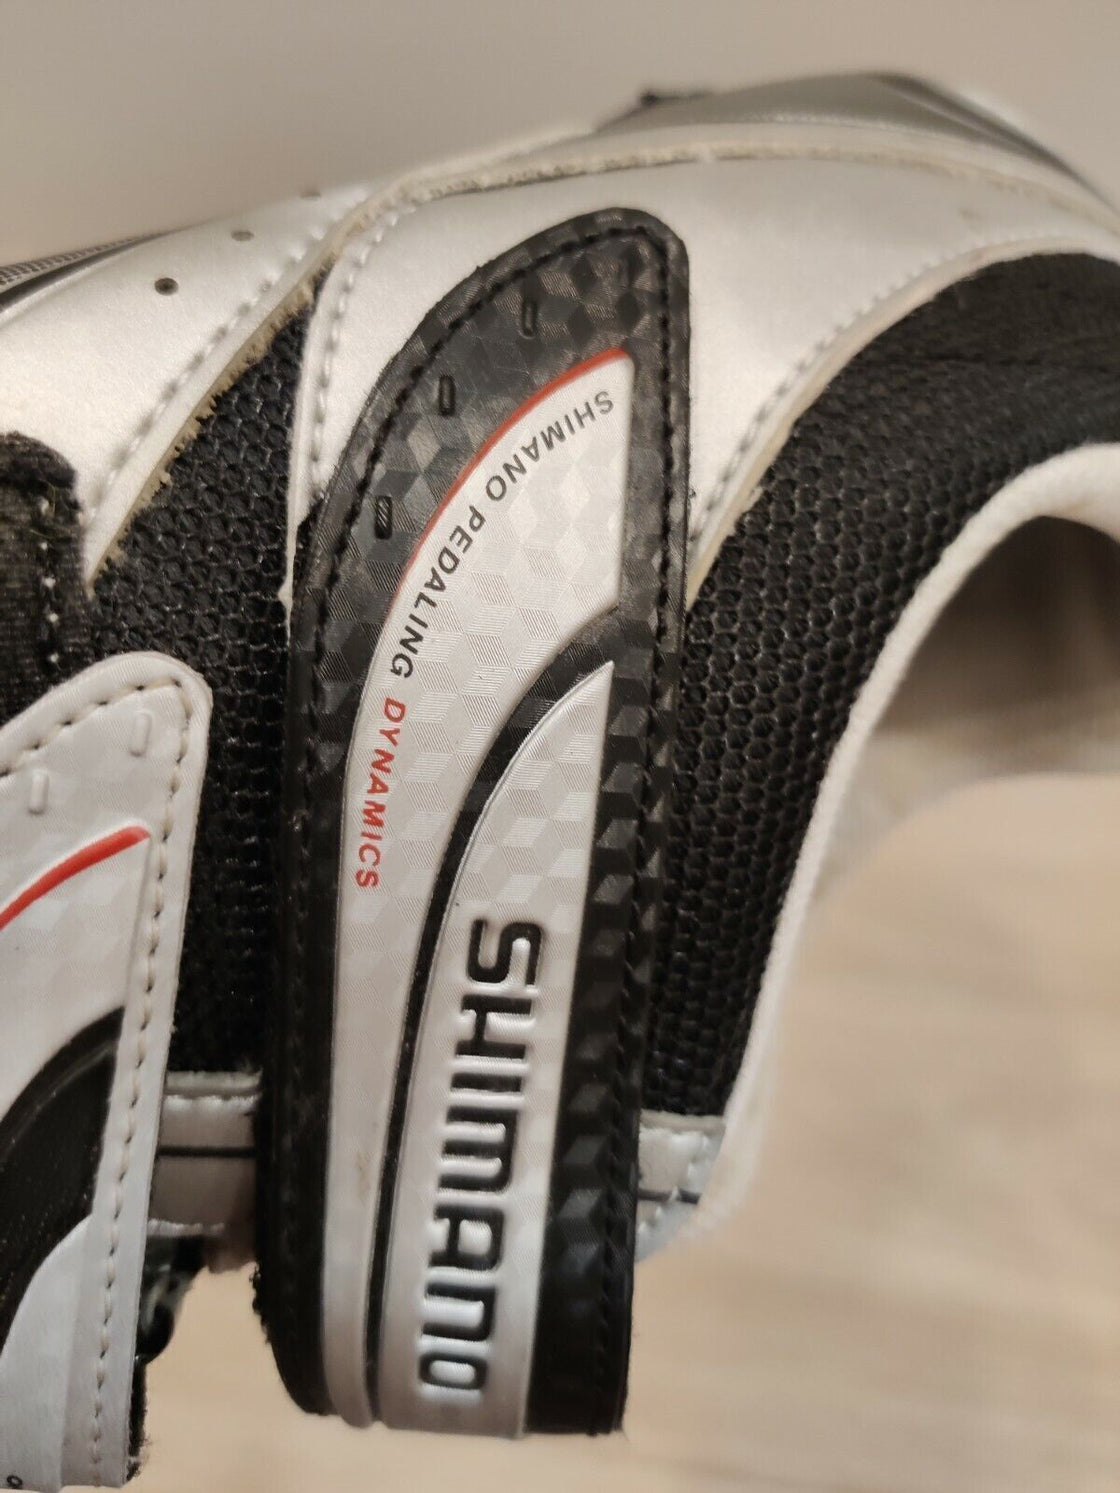 SHIMANO R077 Road Cycling Shoes With Cleats Men's Size EU43